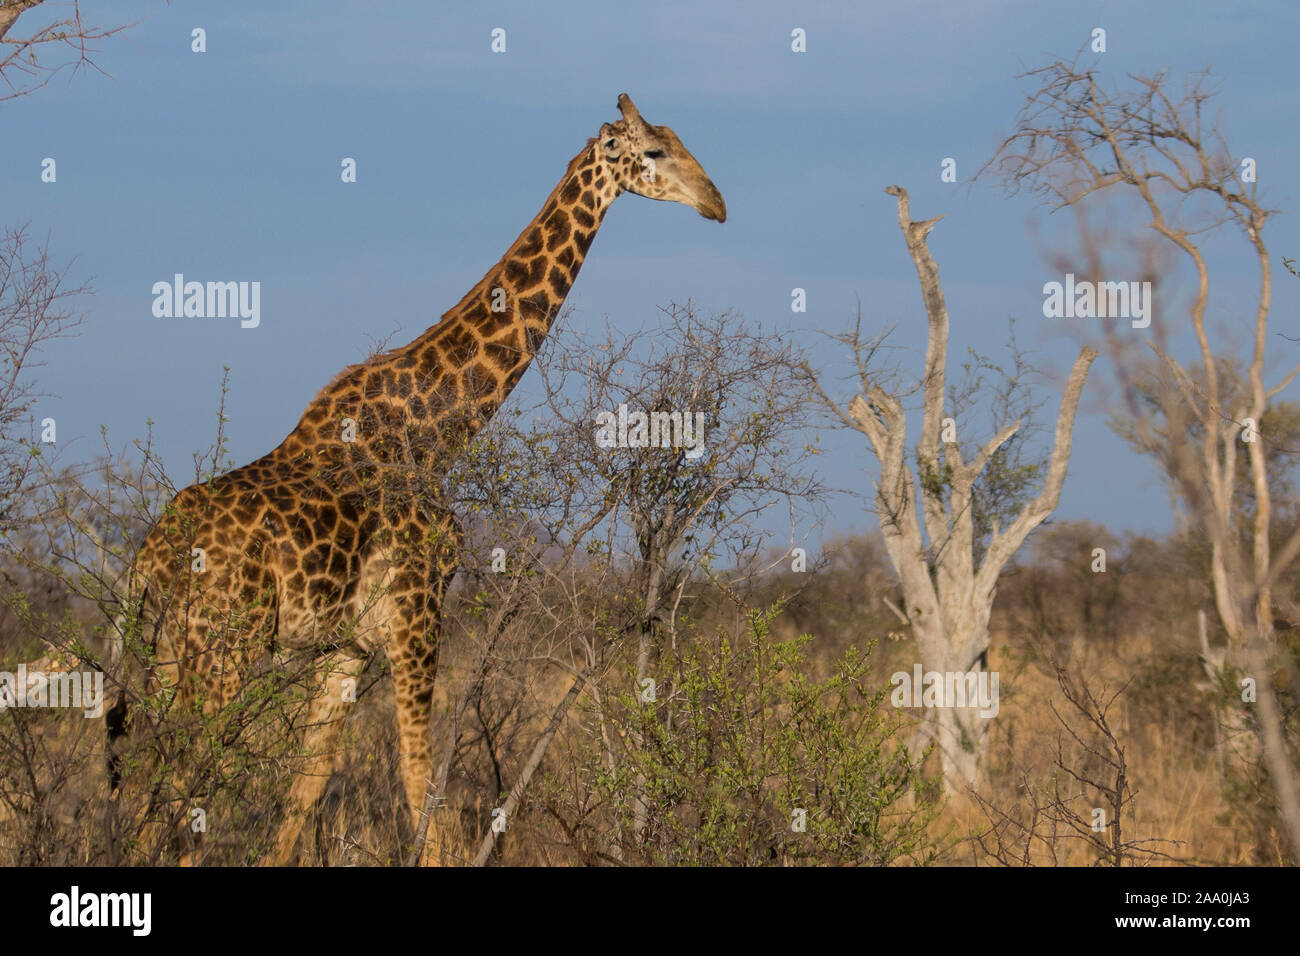 Giraffe walking through the trees in Africa Stock Photo